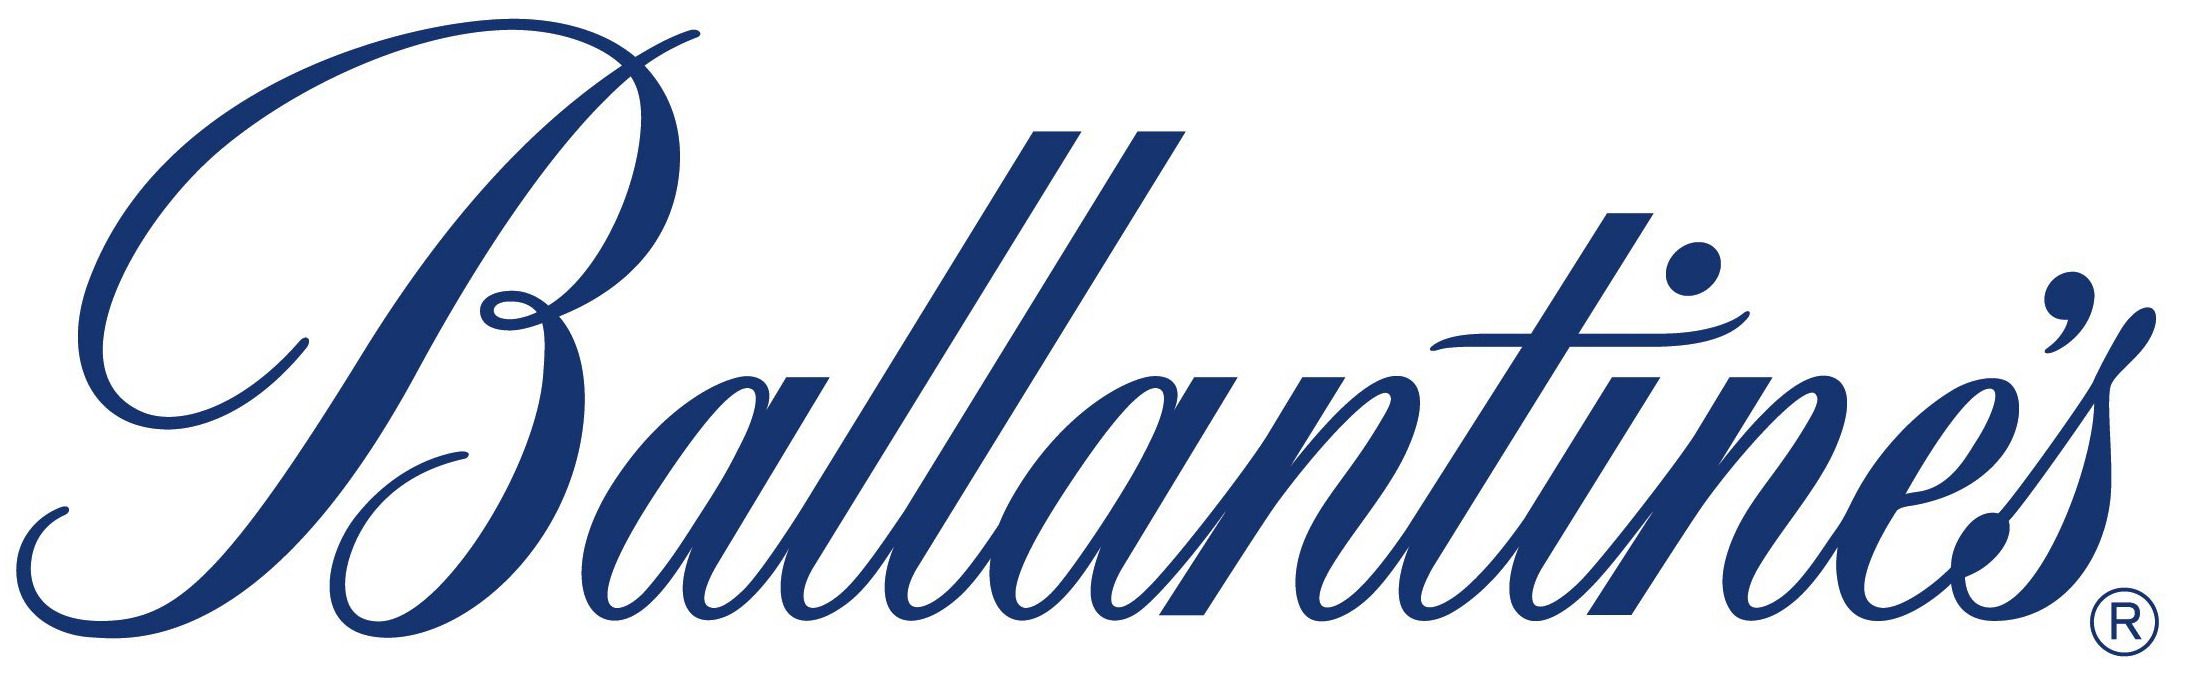 ballantines_logo.jpg